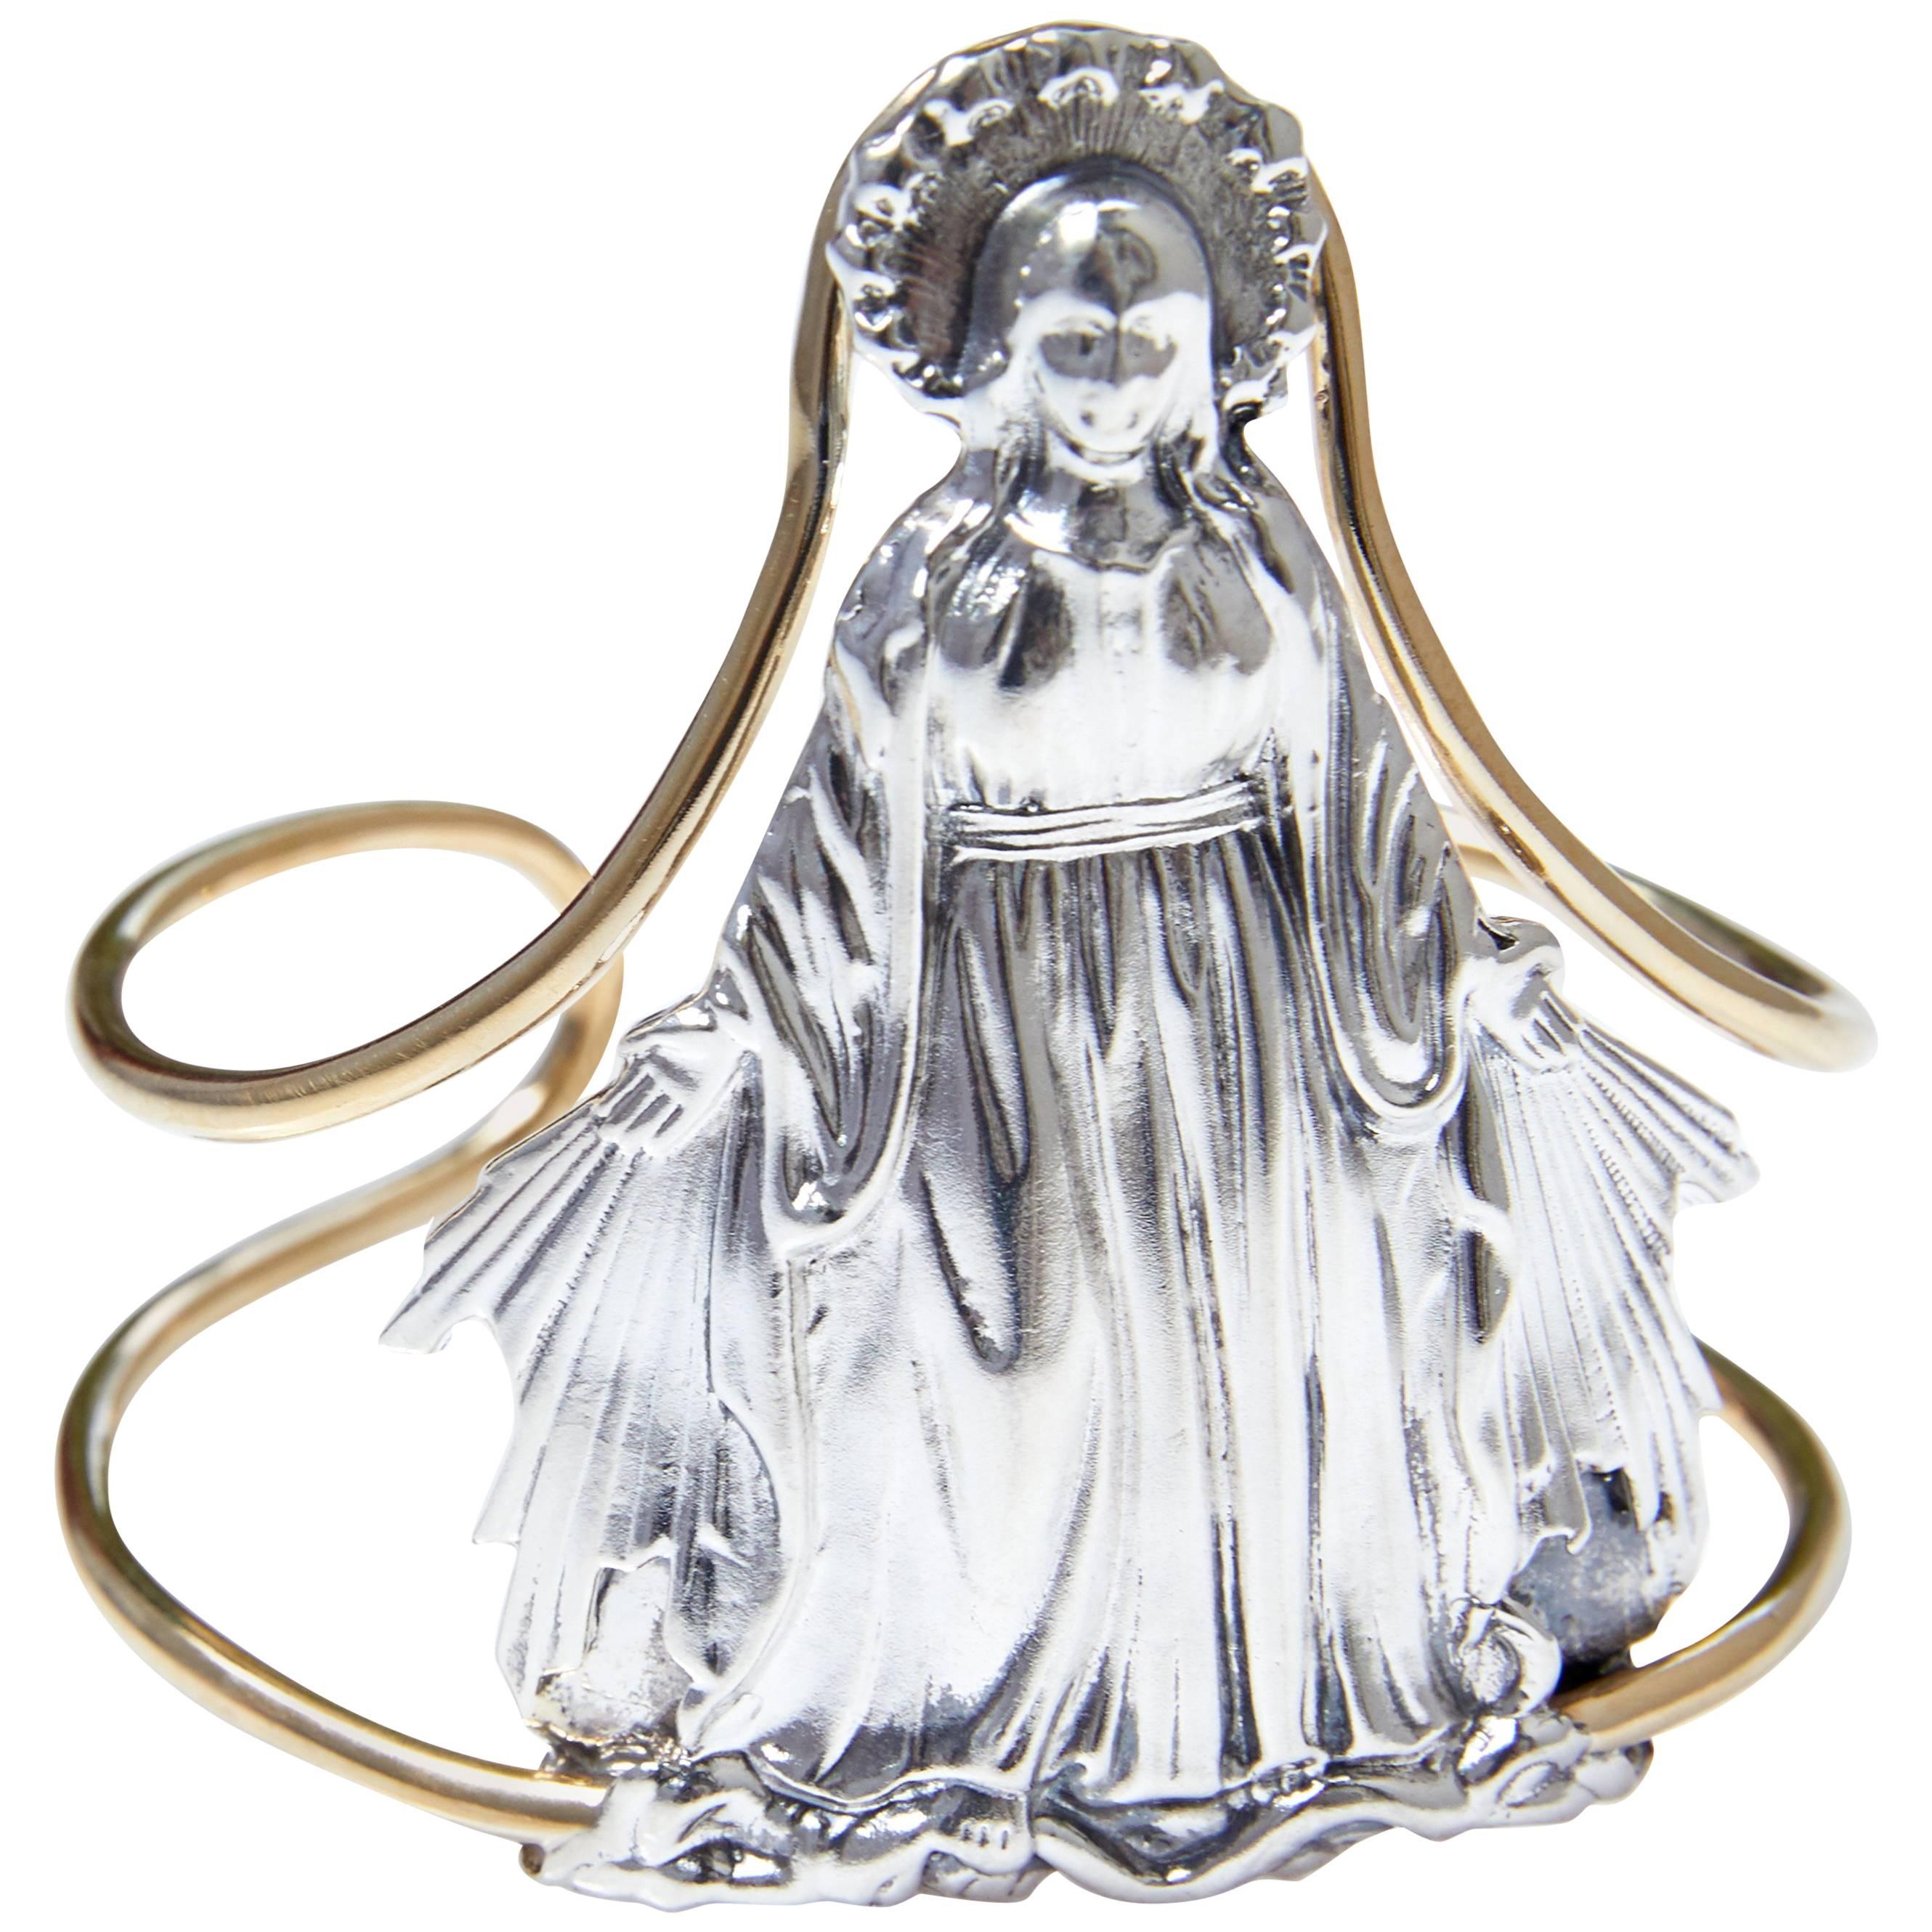 Virgin Mary Statement Arm Cuff Bangle Silver Brass
J DAUPHIN 